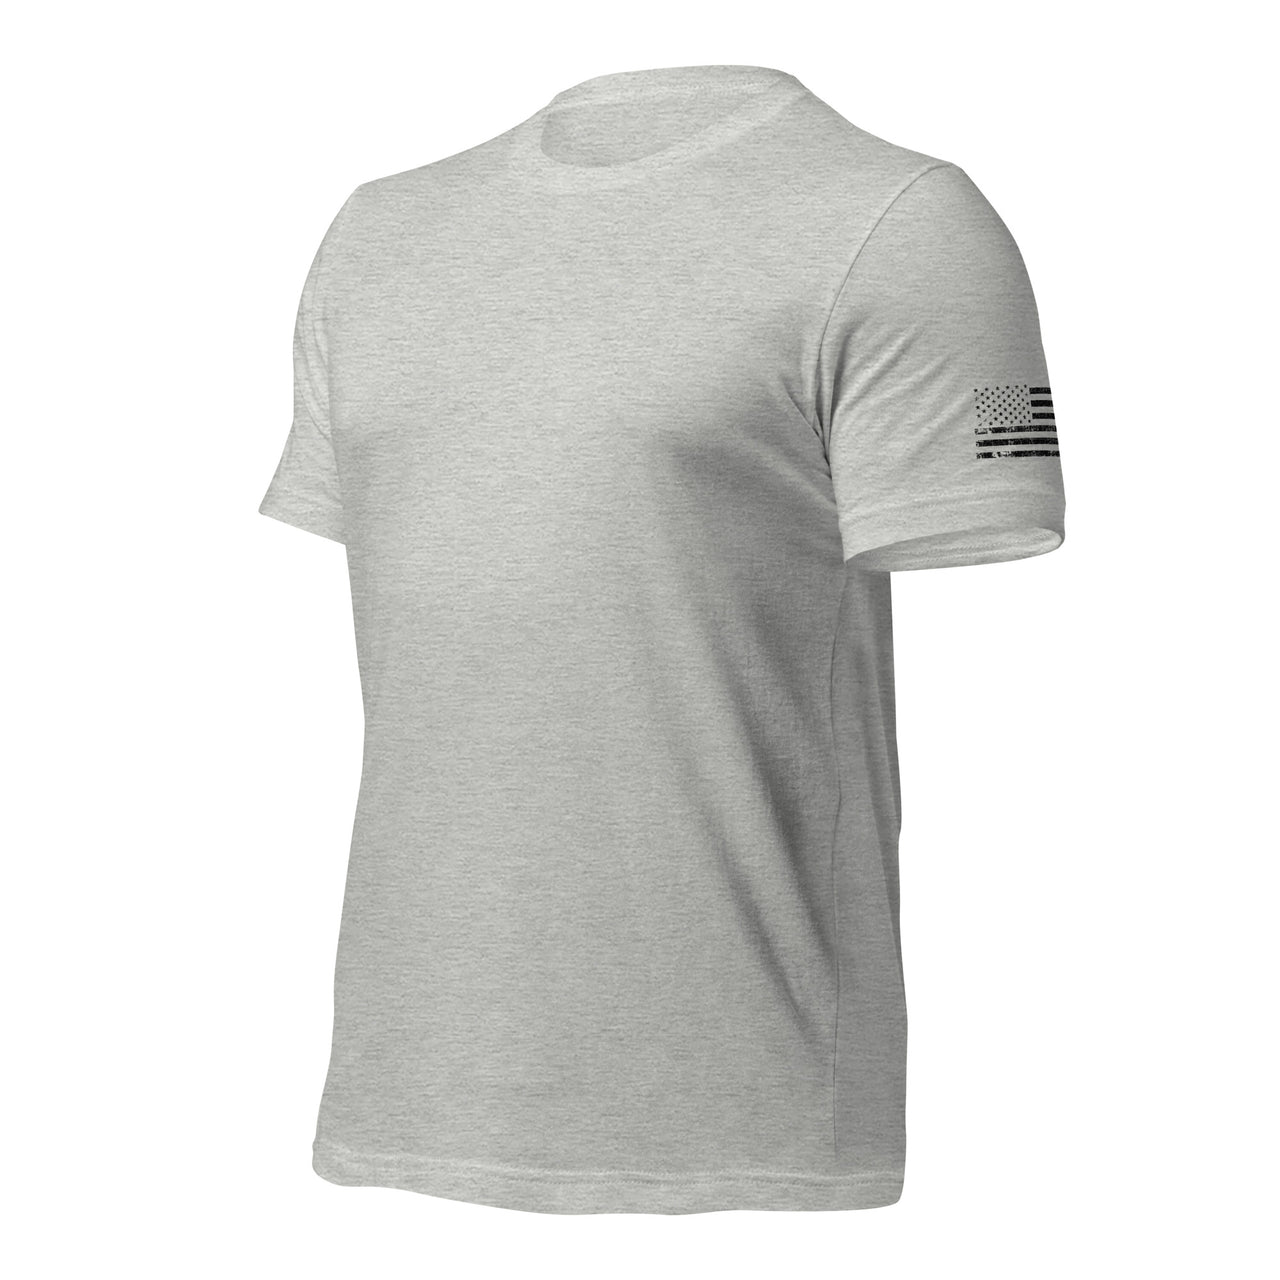 American Flag Sleeve Print T-shirt in Sport Grey